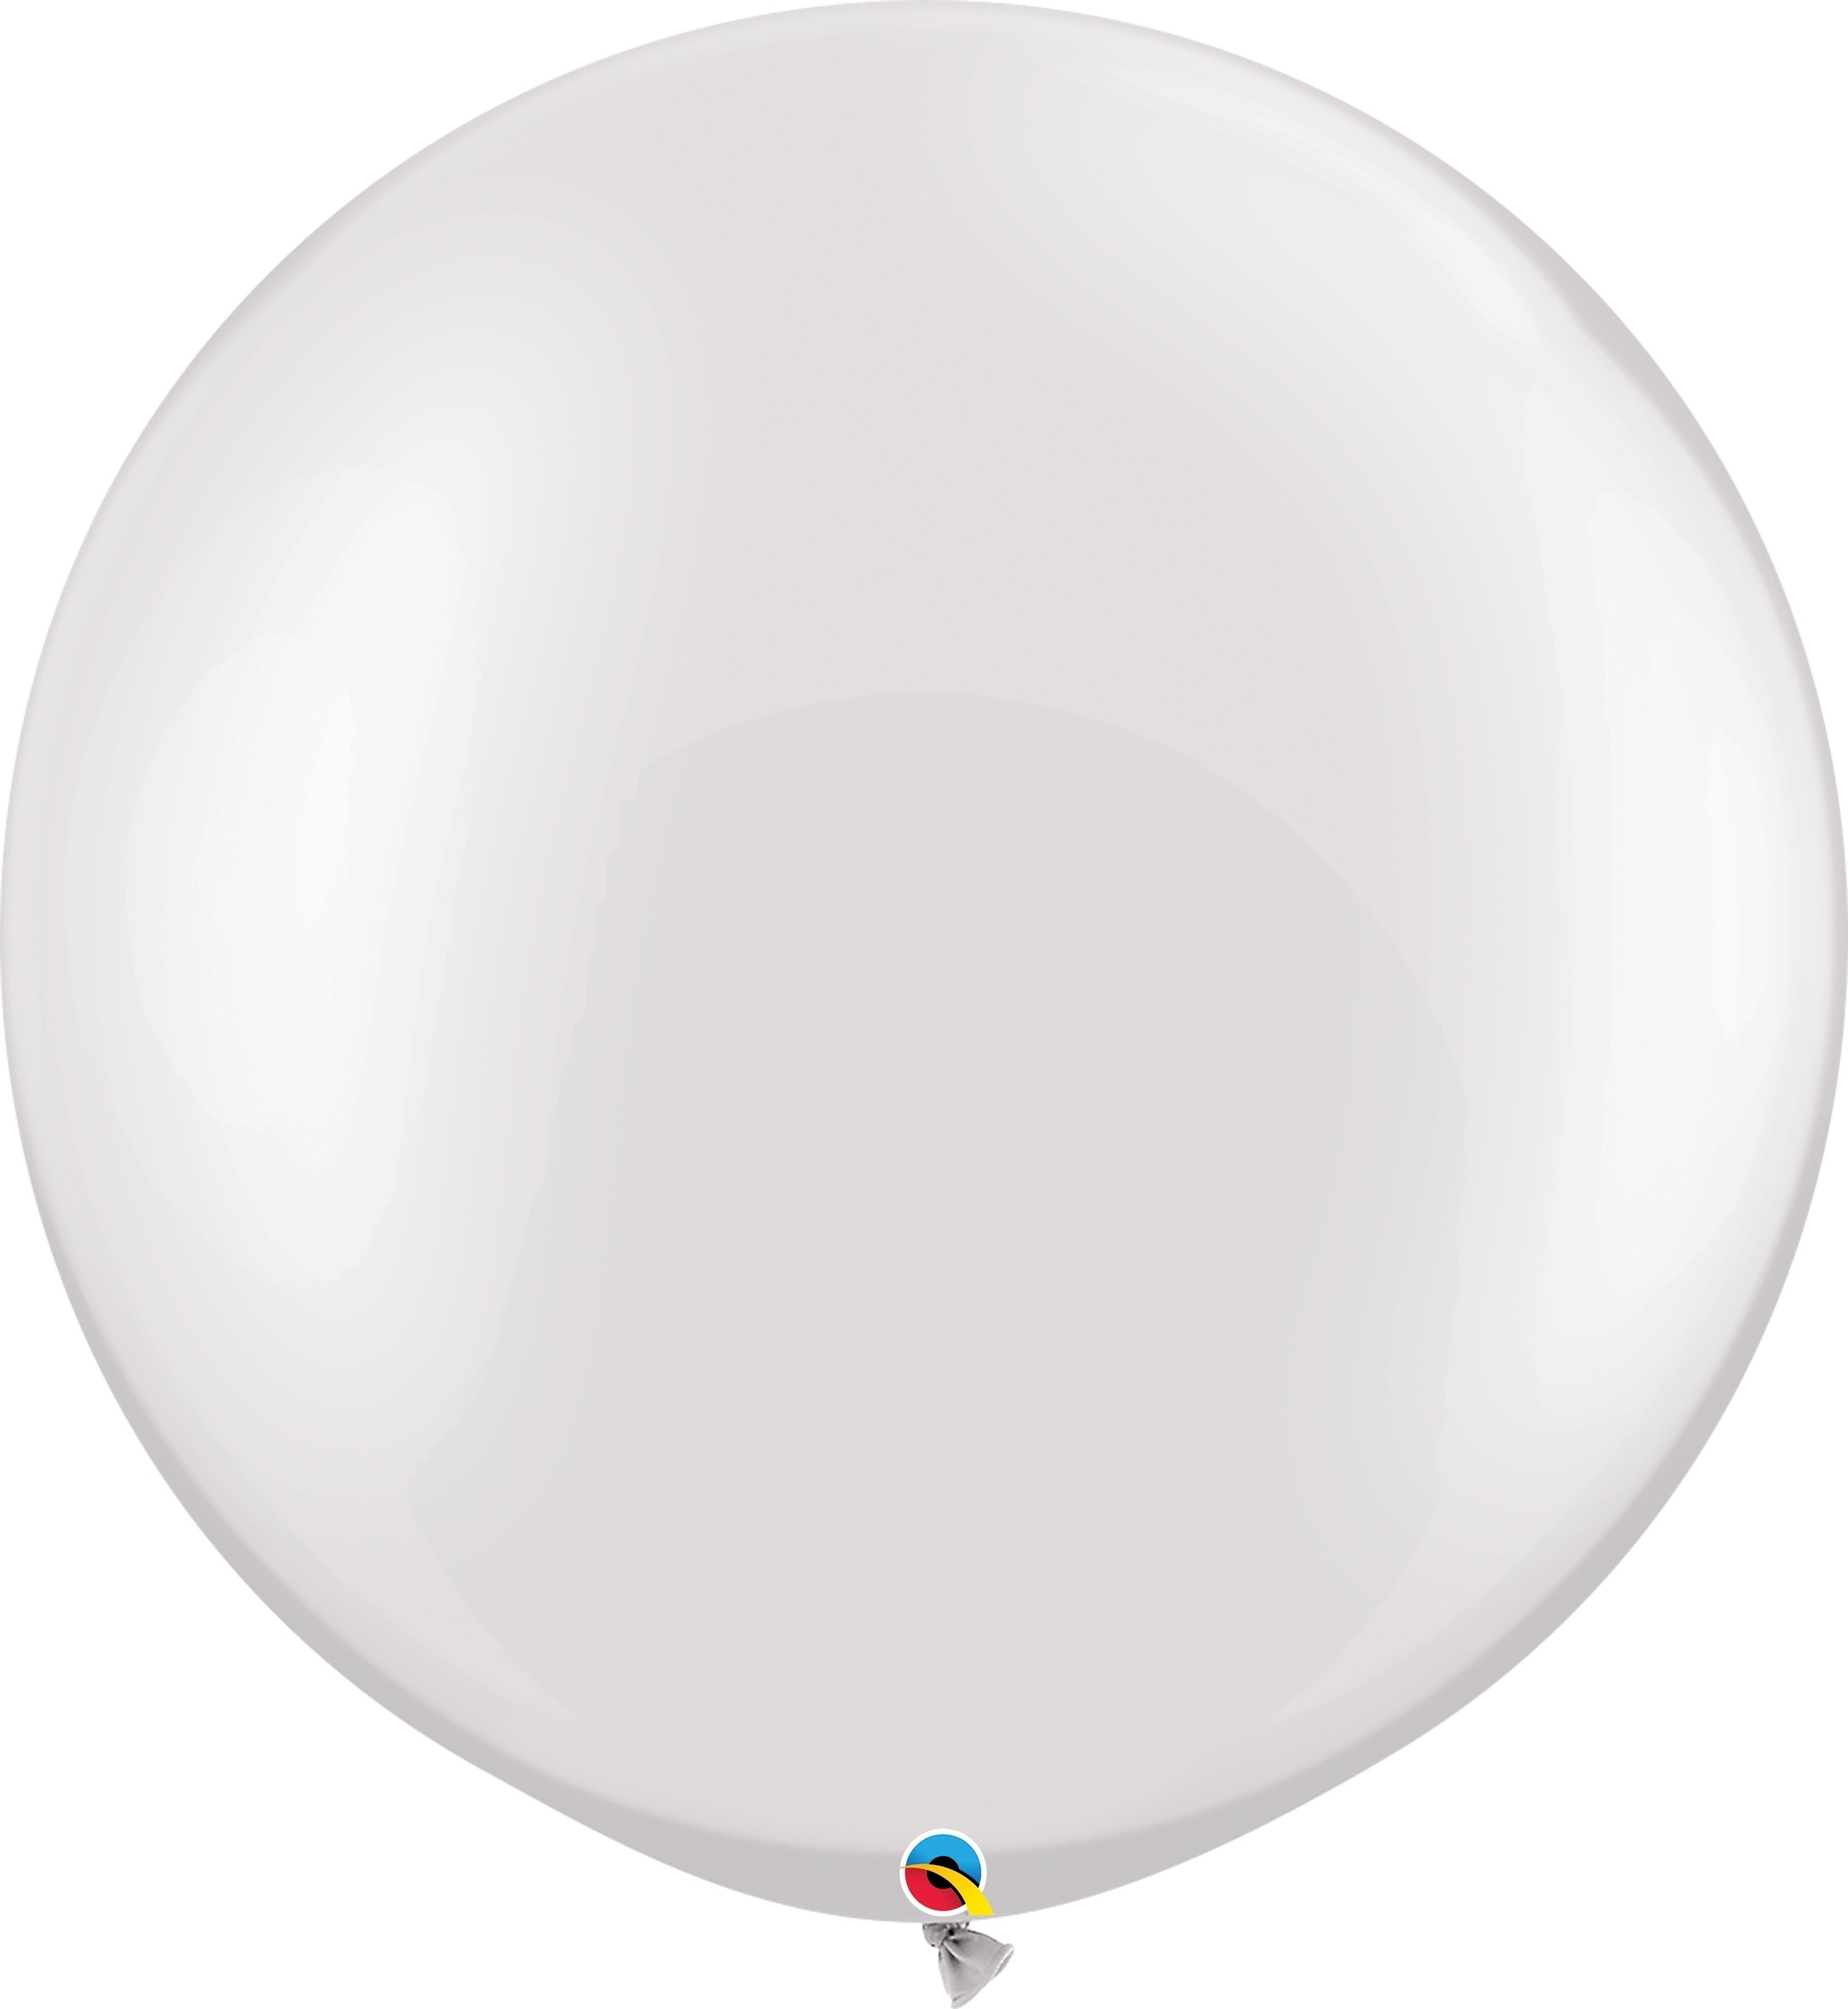 Qualatex Latexballon Gigant Pearl White Ø 75cm